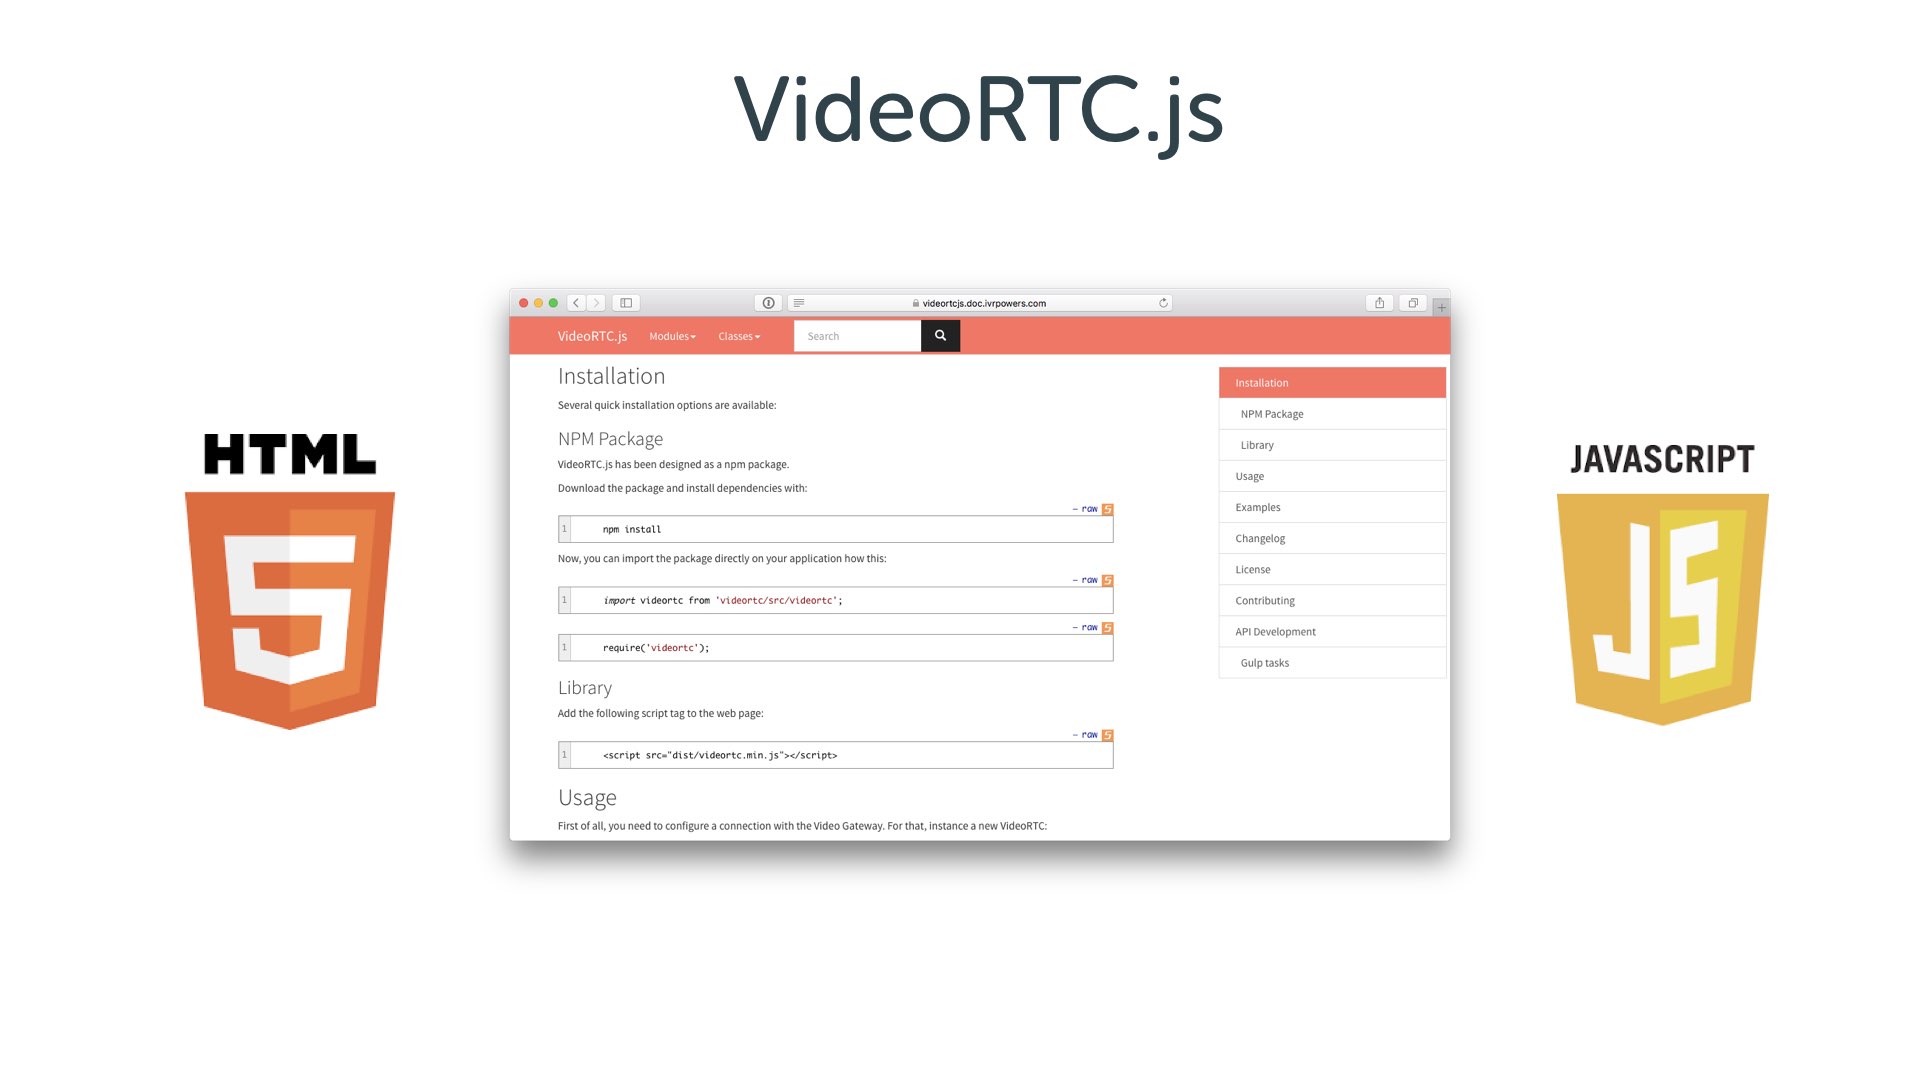 VideoRTC.js